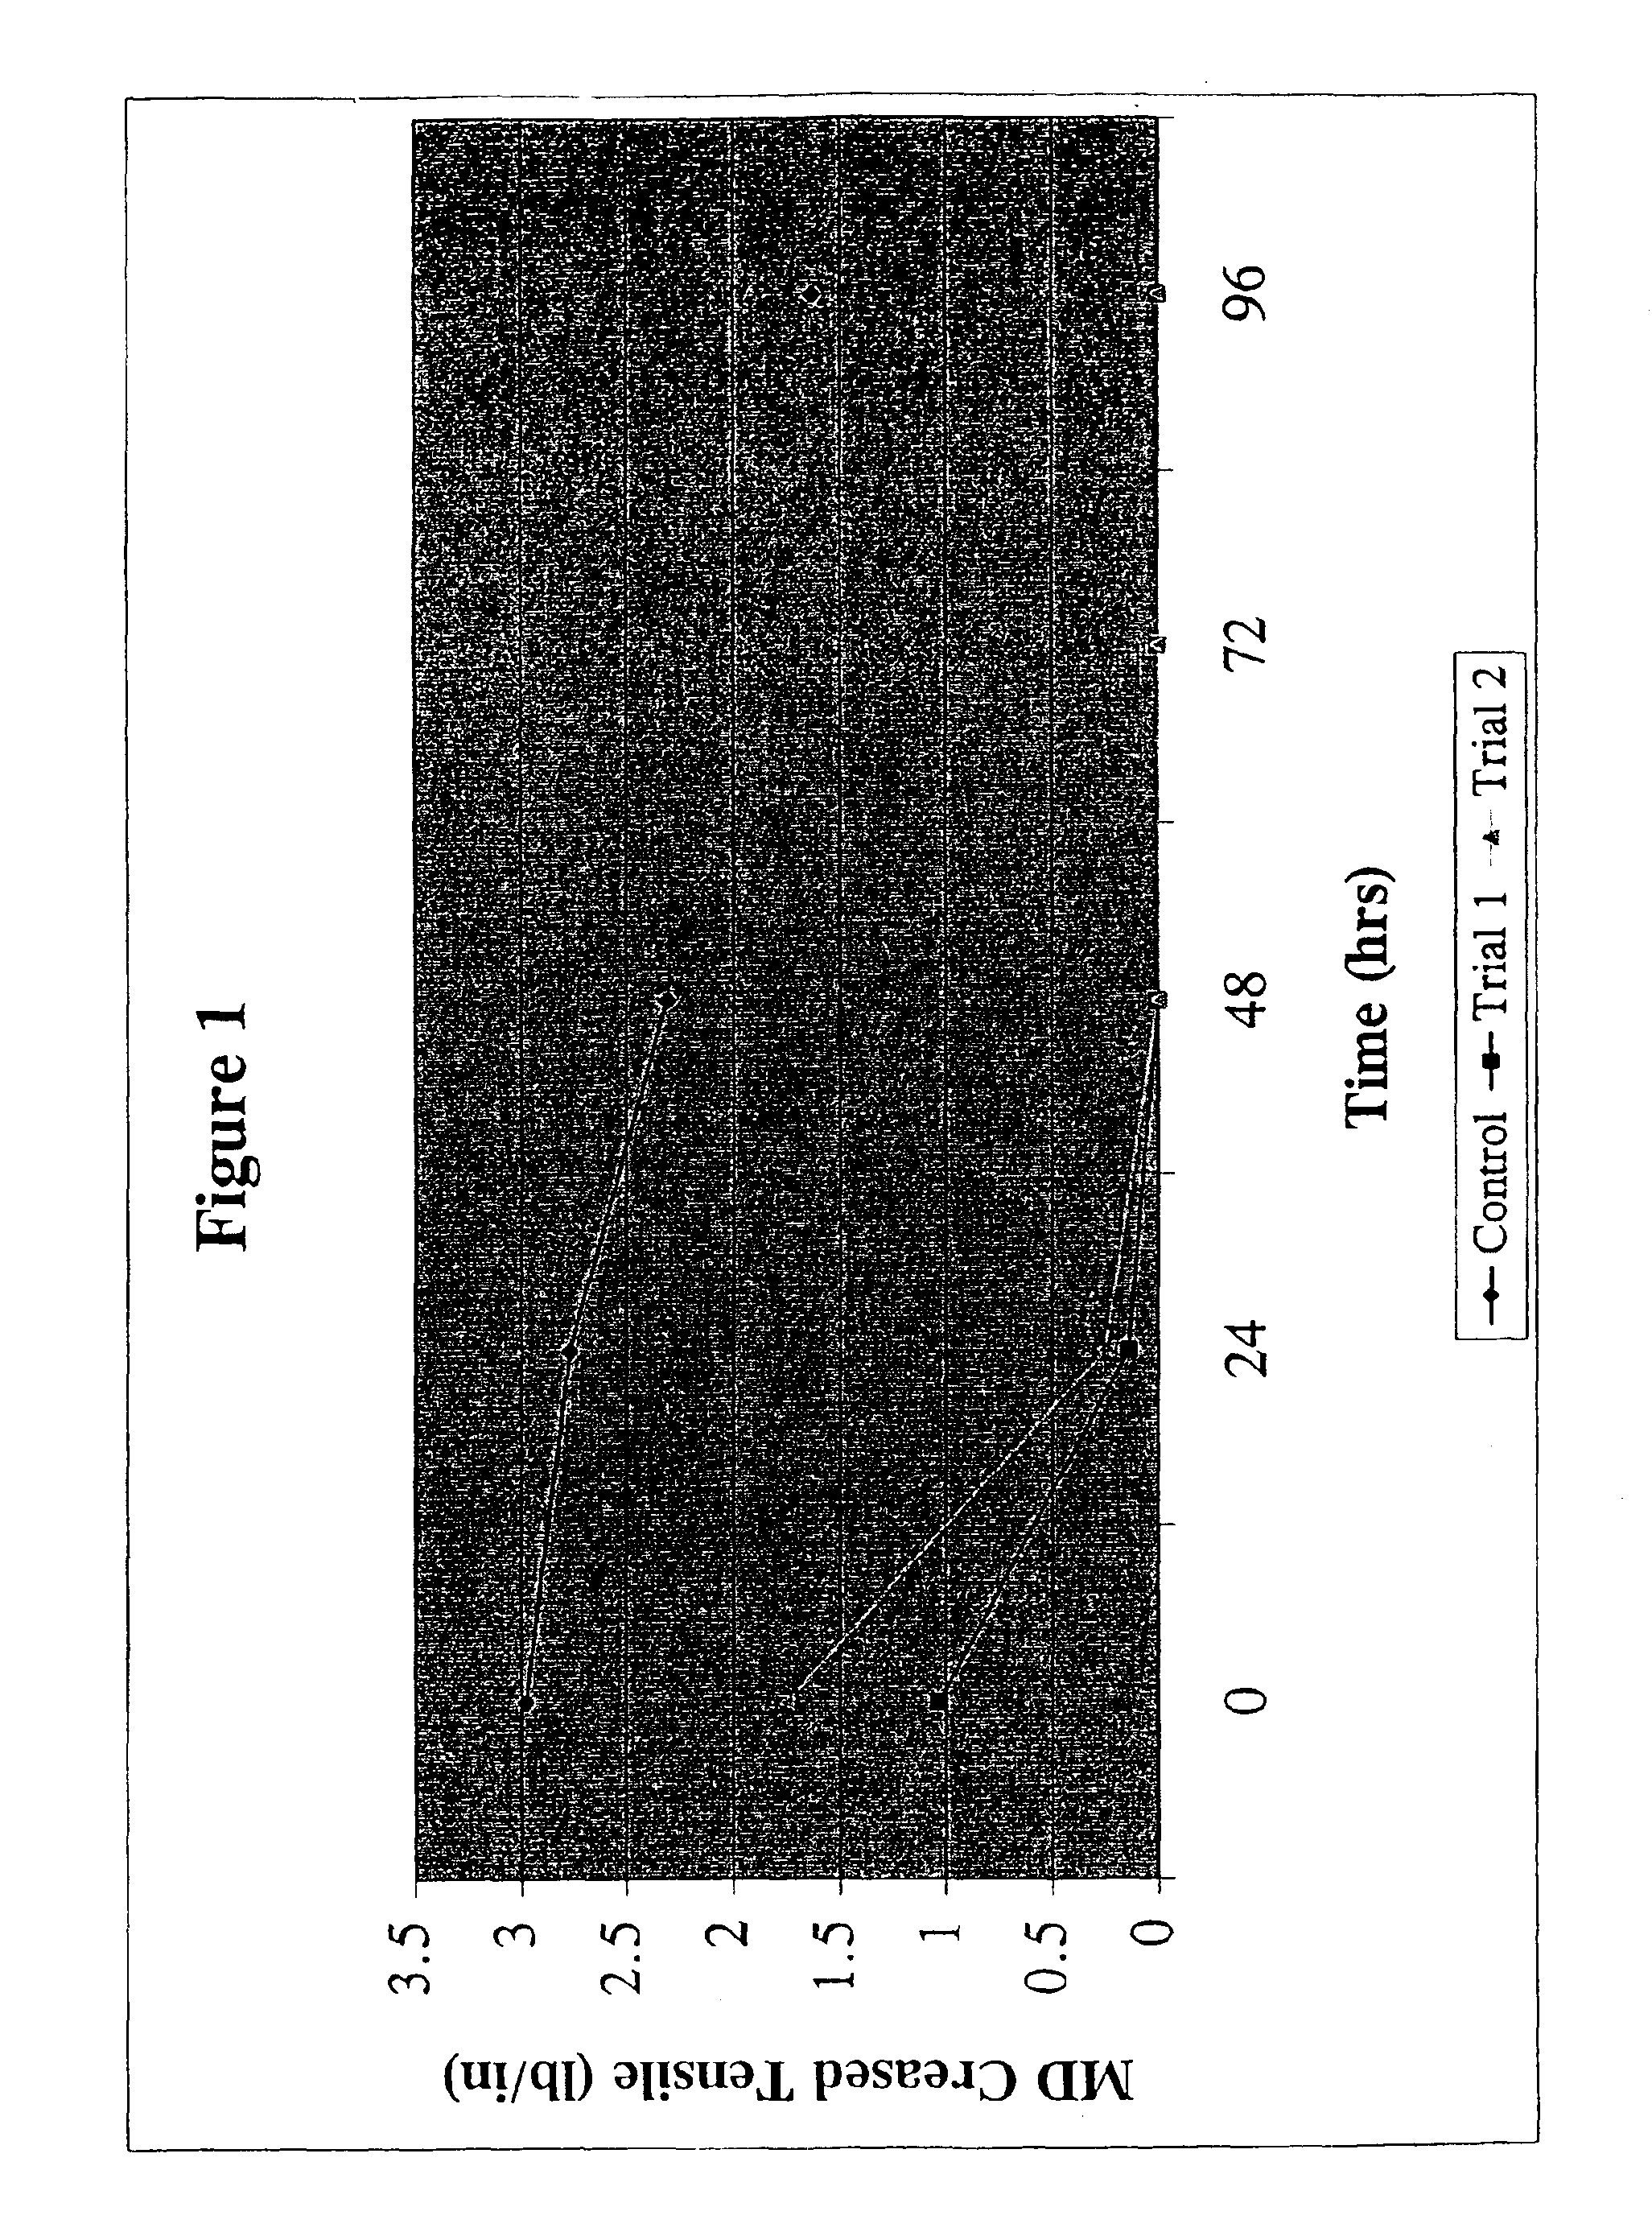 Low boron containing microfiberglass filtration media